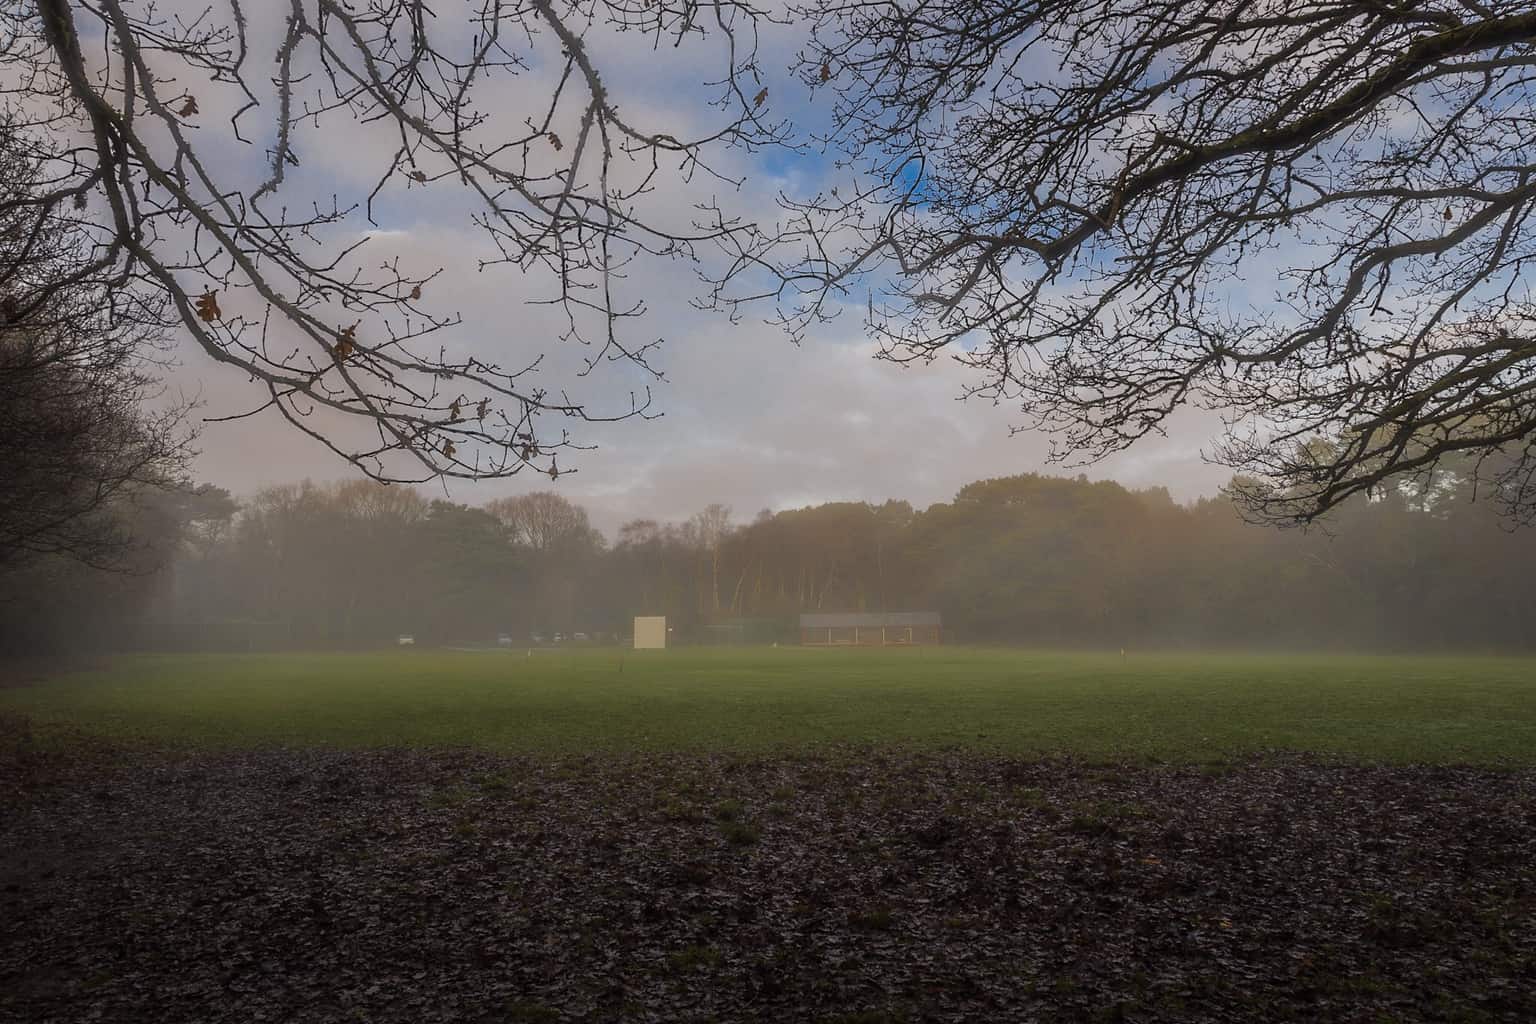  Broadstone Cricket Club in the mist 